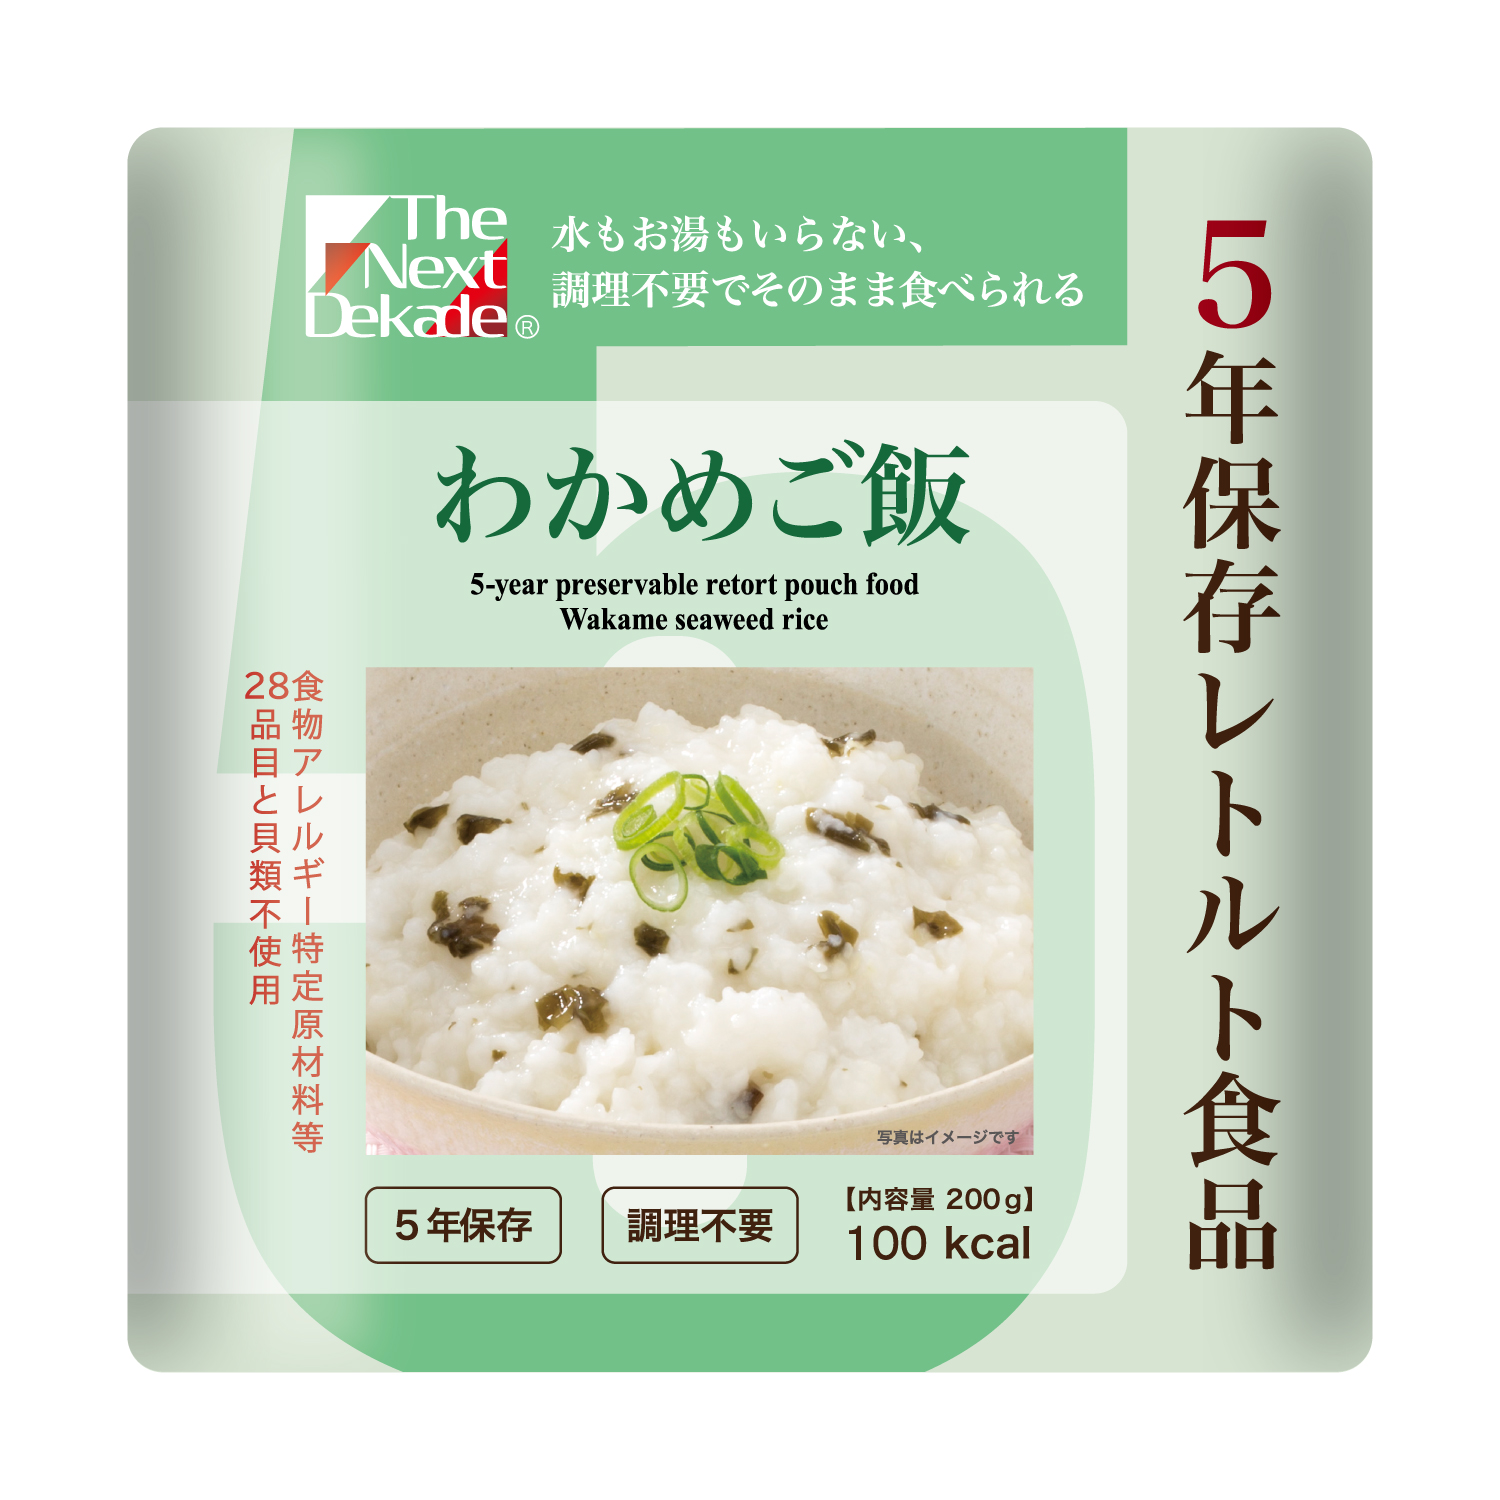 Wakame seaweed rice